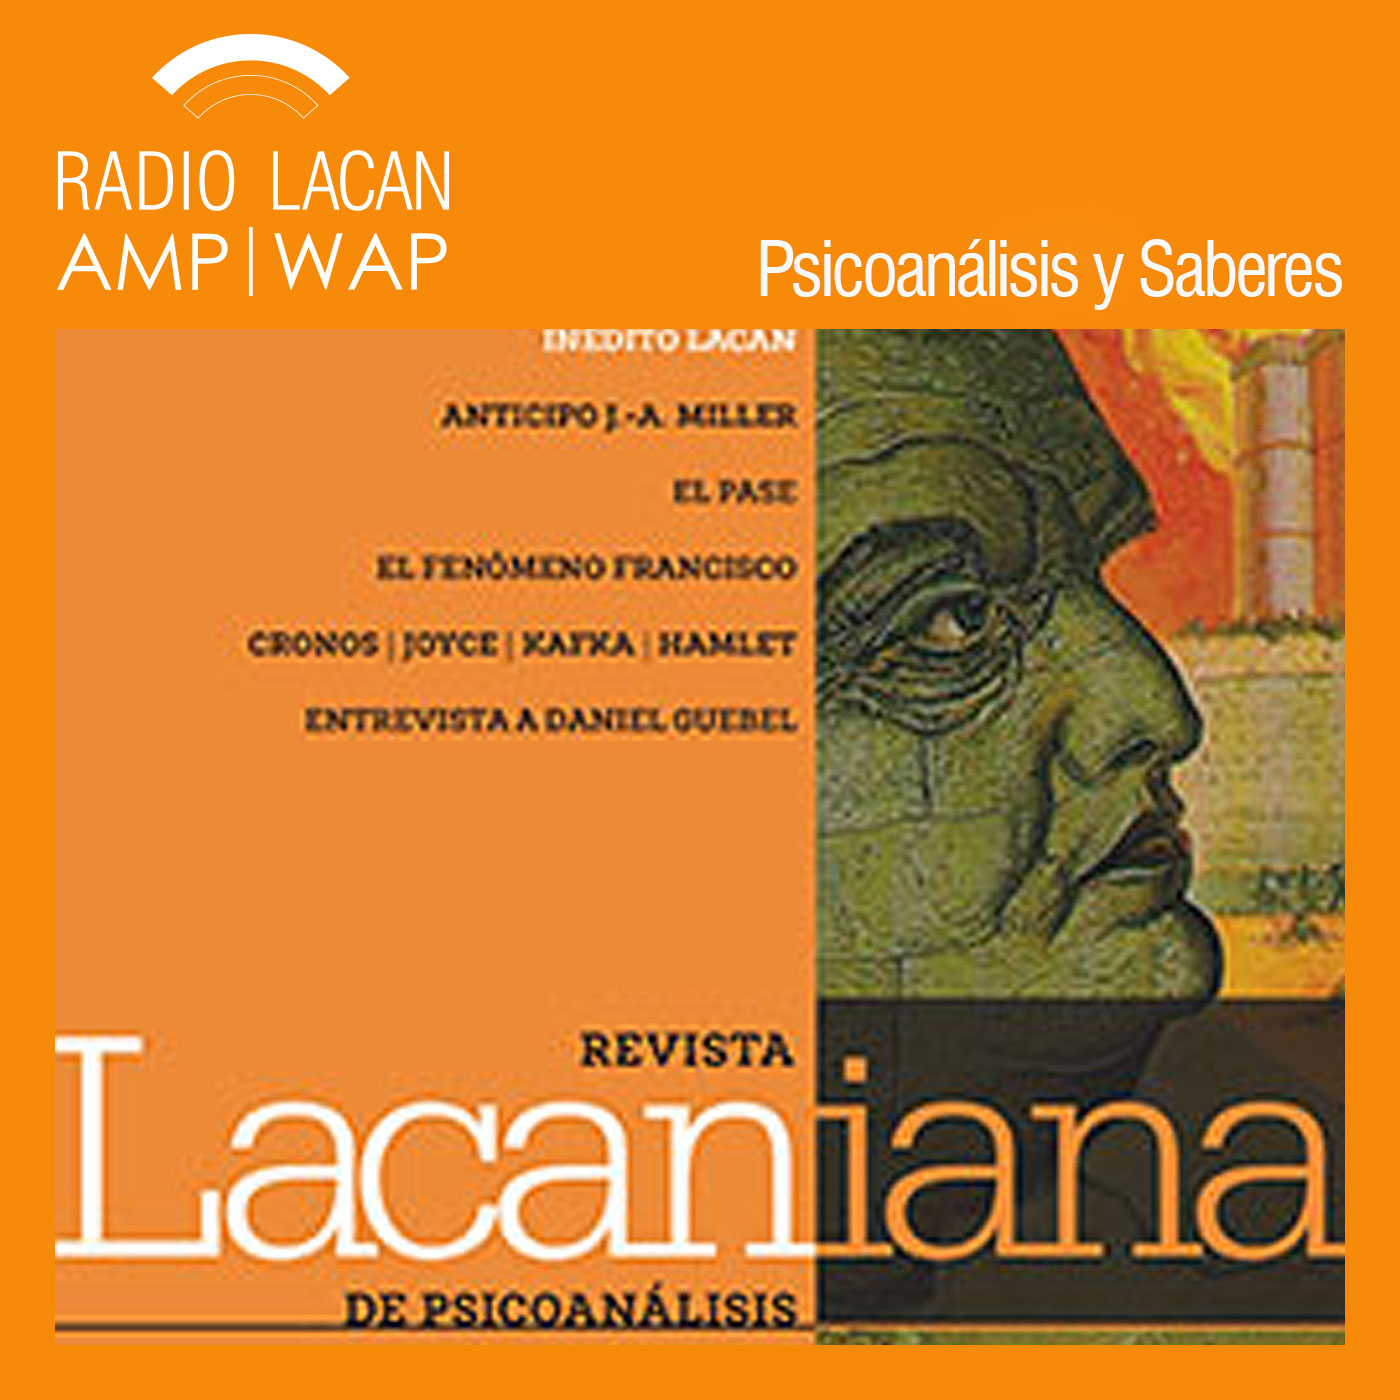 RadioLacan.com | Presentación de Lacaniana Nº 20. Carta al Padre